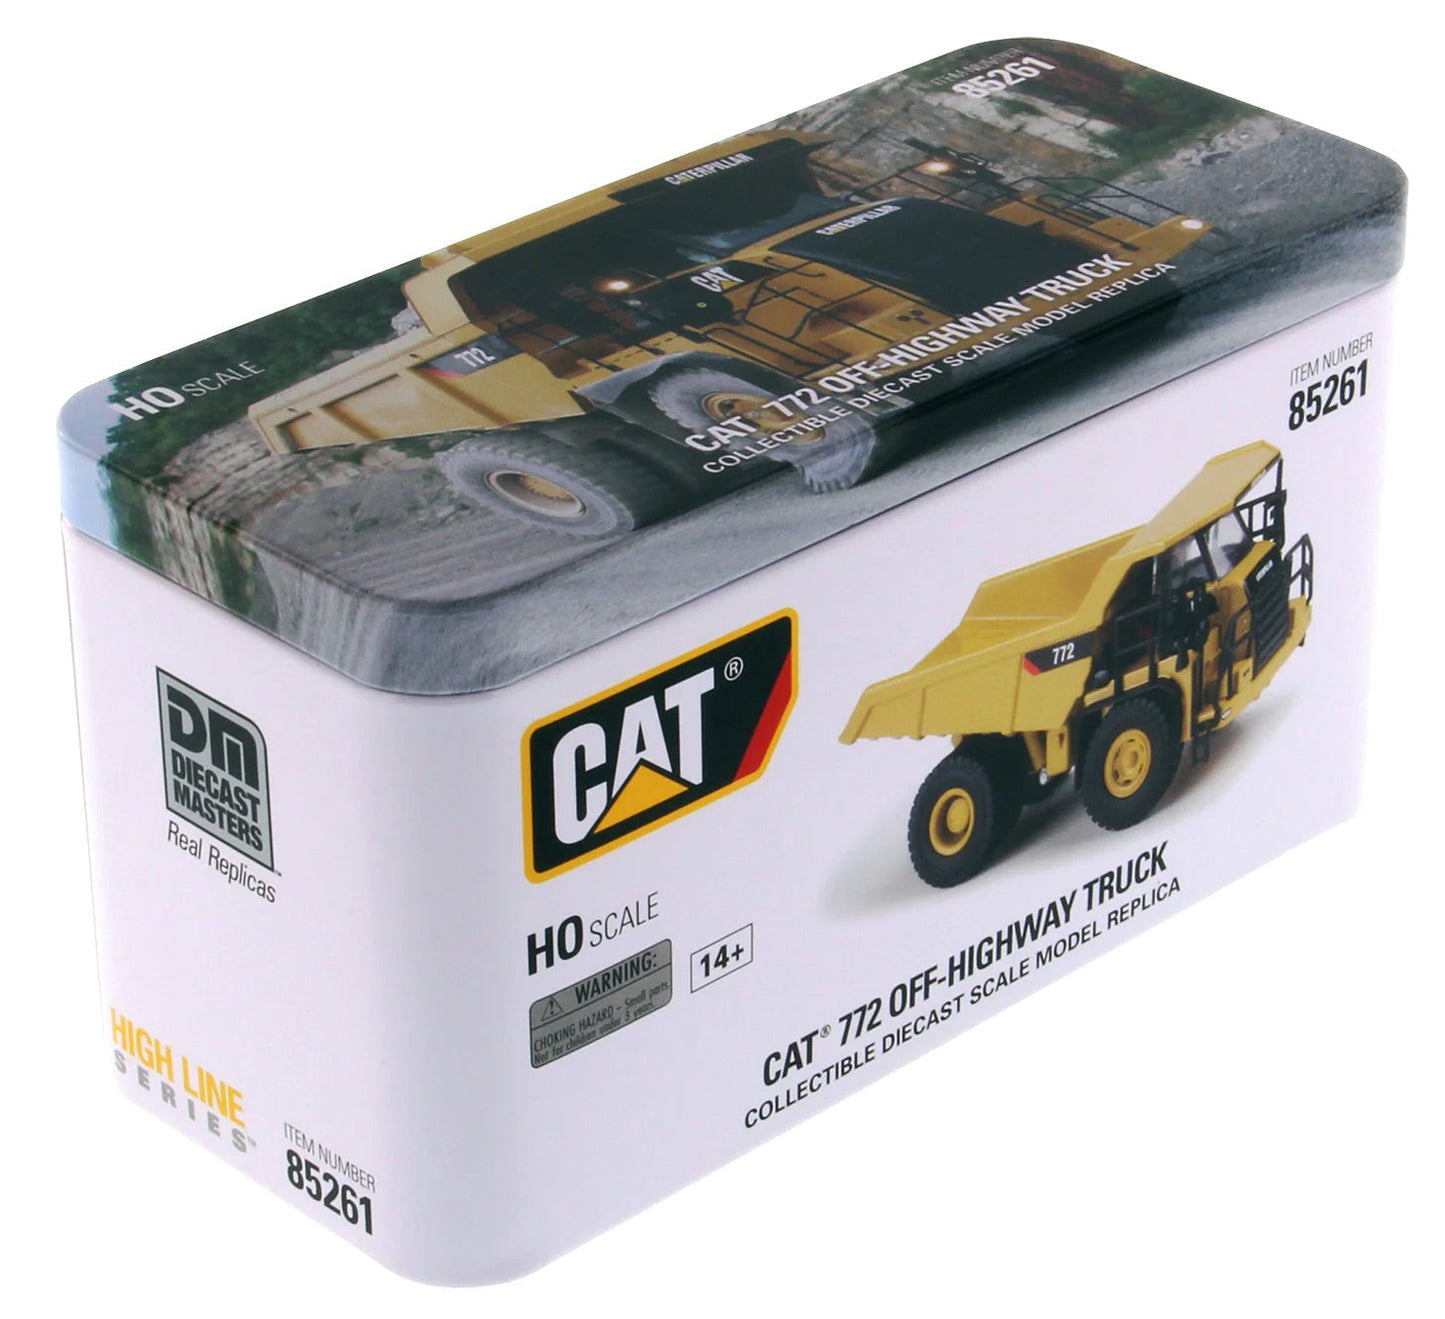  Caterpillar 772 Off-Highway Truck 1/87 (HO) Scale Model DM# 85261